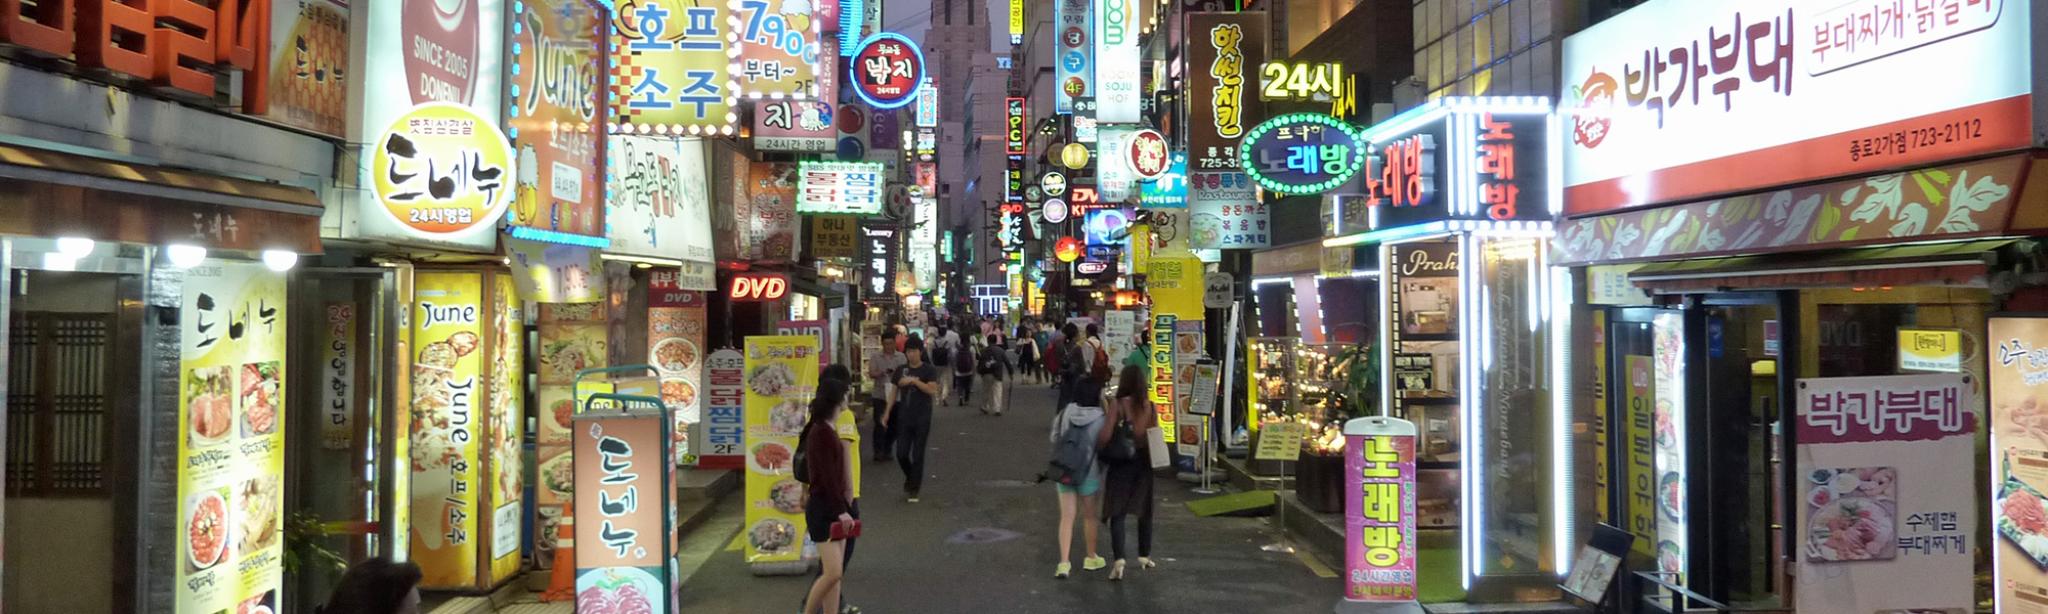 Korean streetscape at night